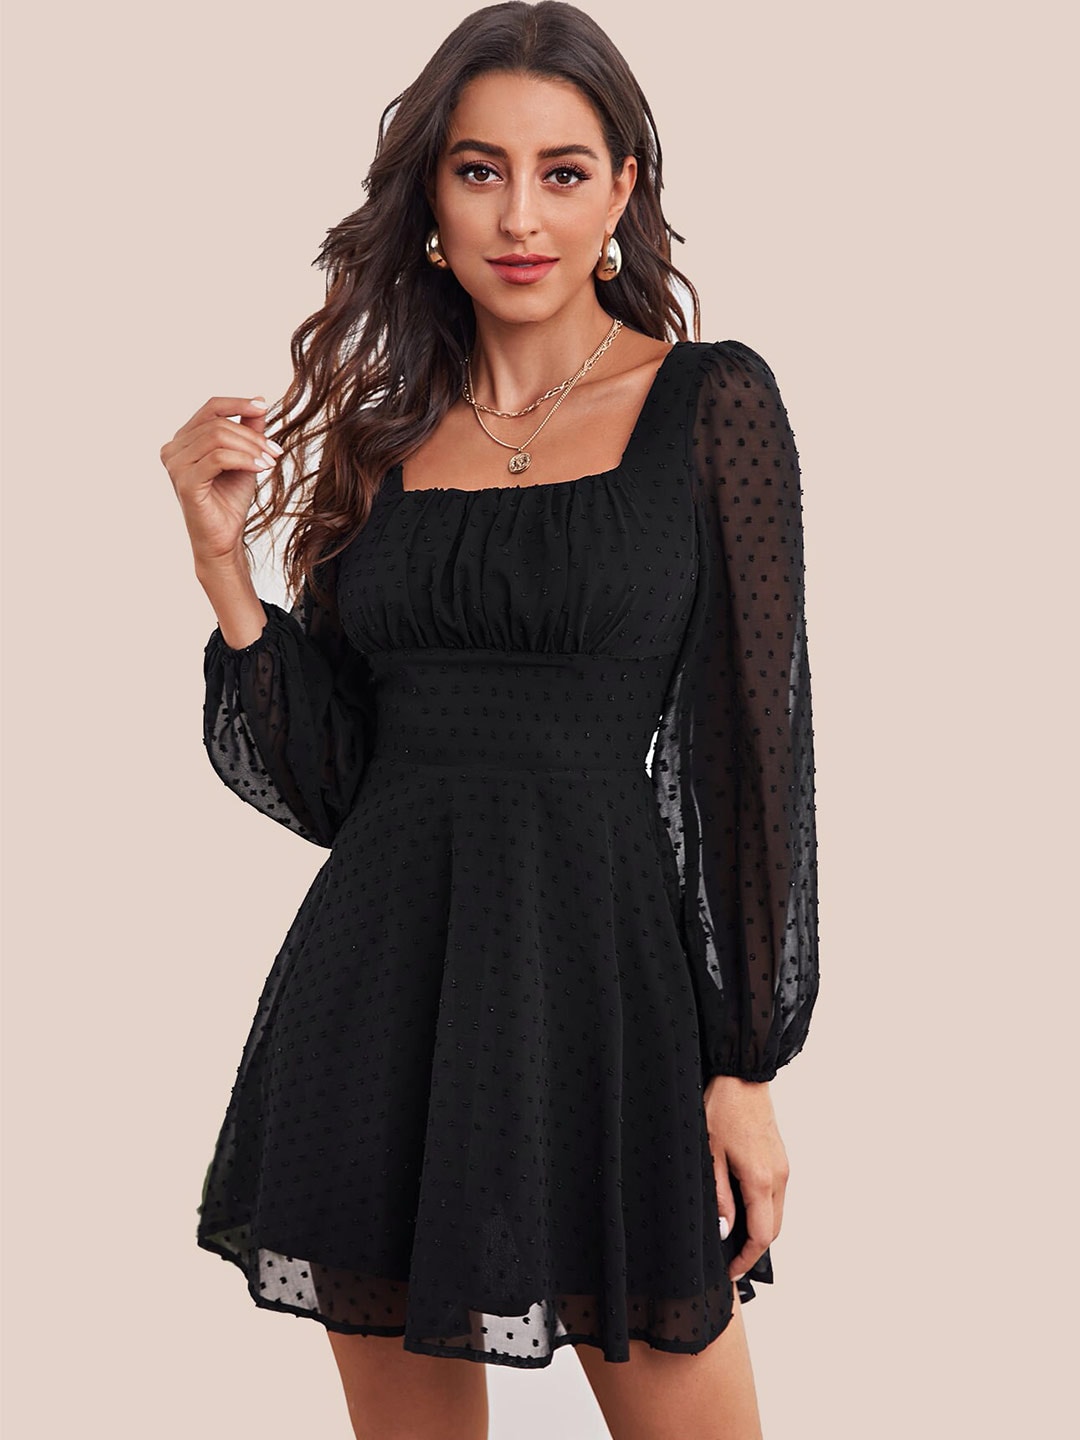 SHEETAL Associates Women Black Georgette Dress Price in India